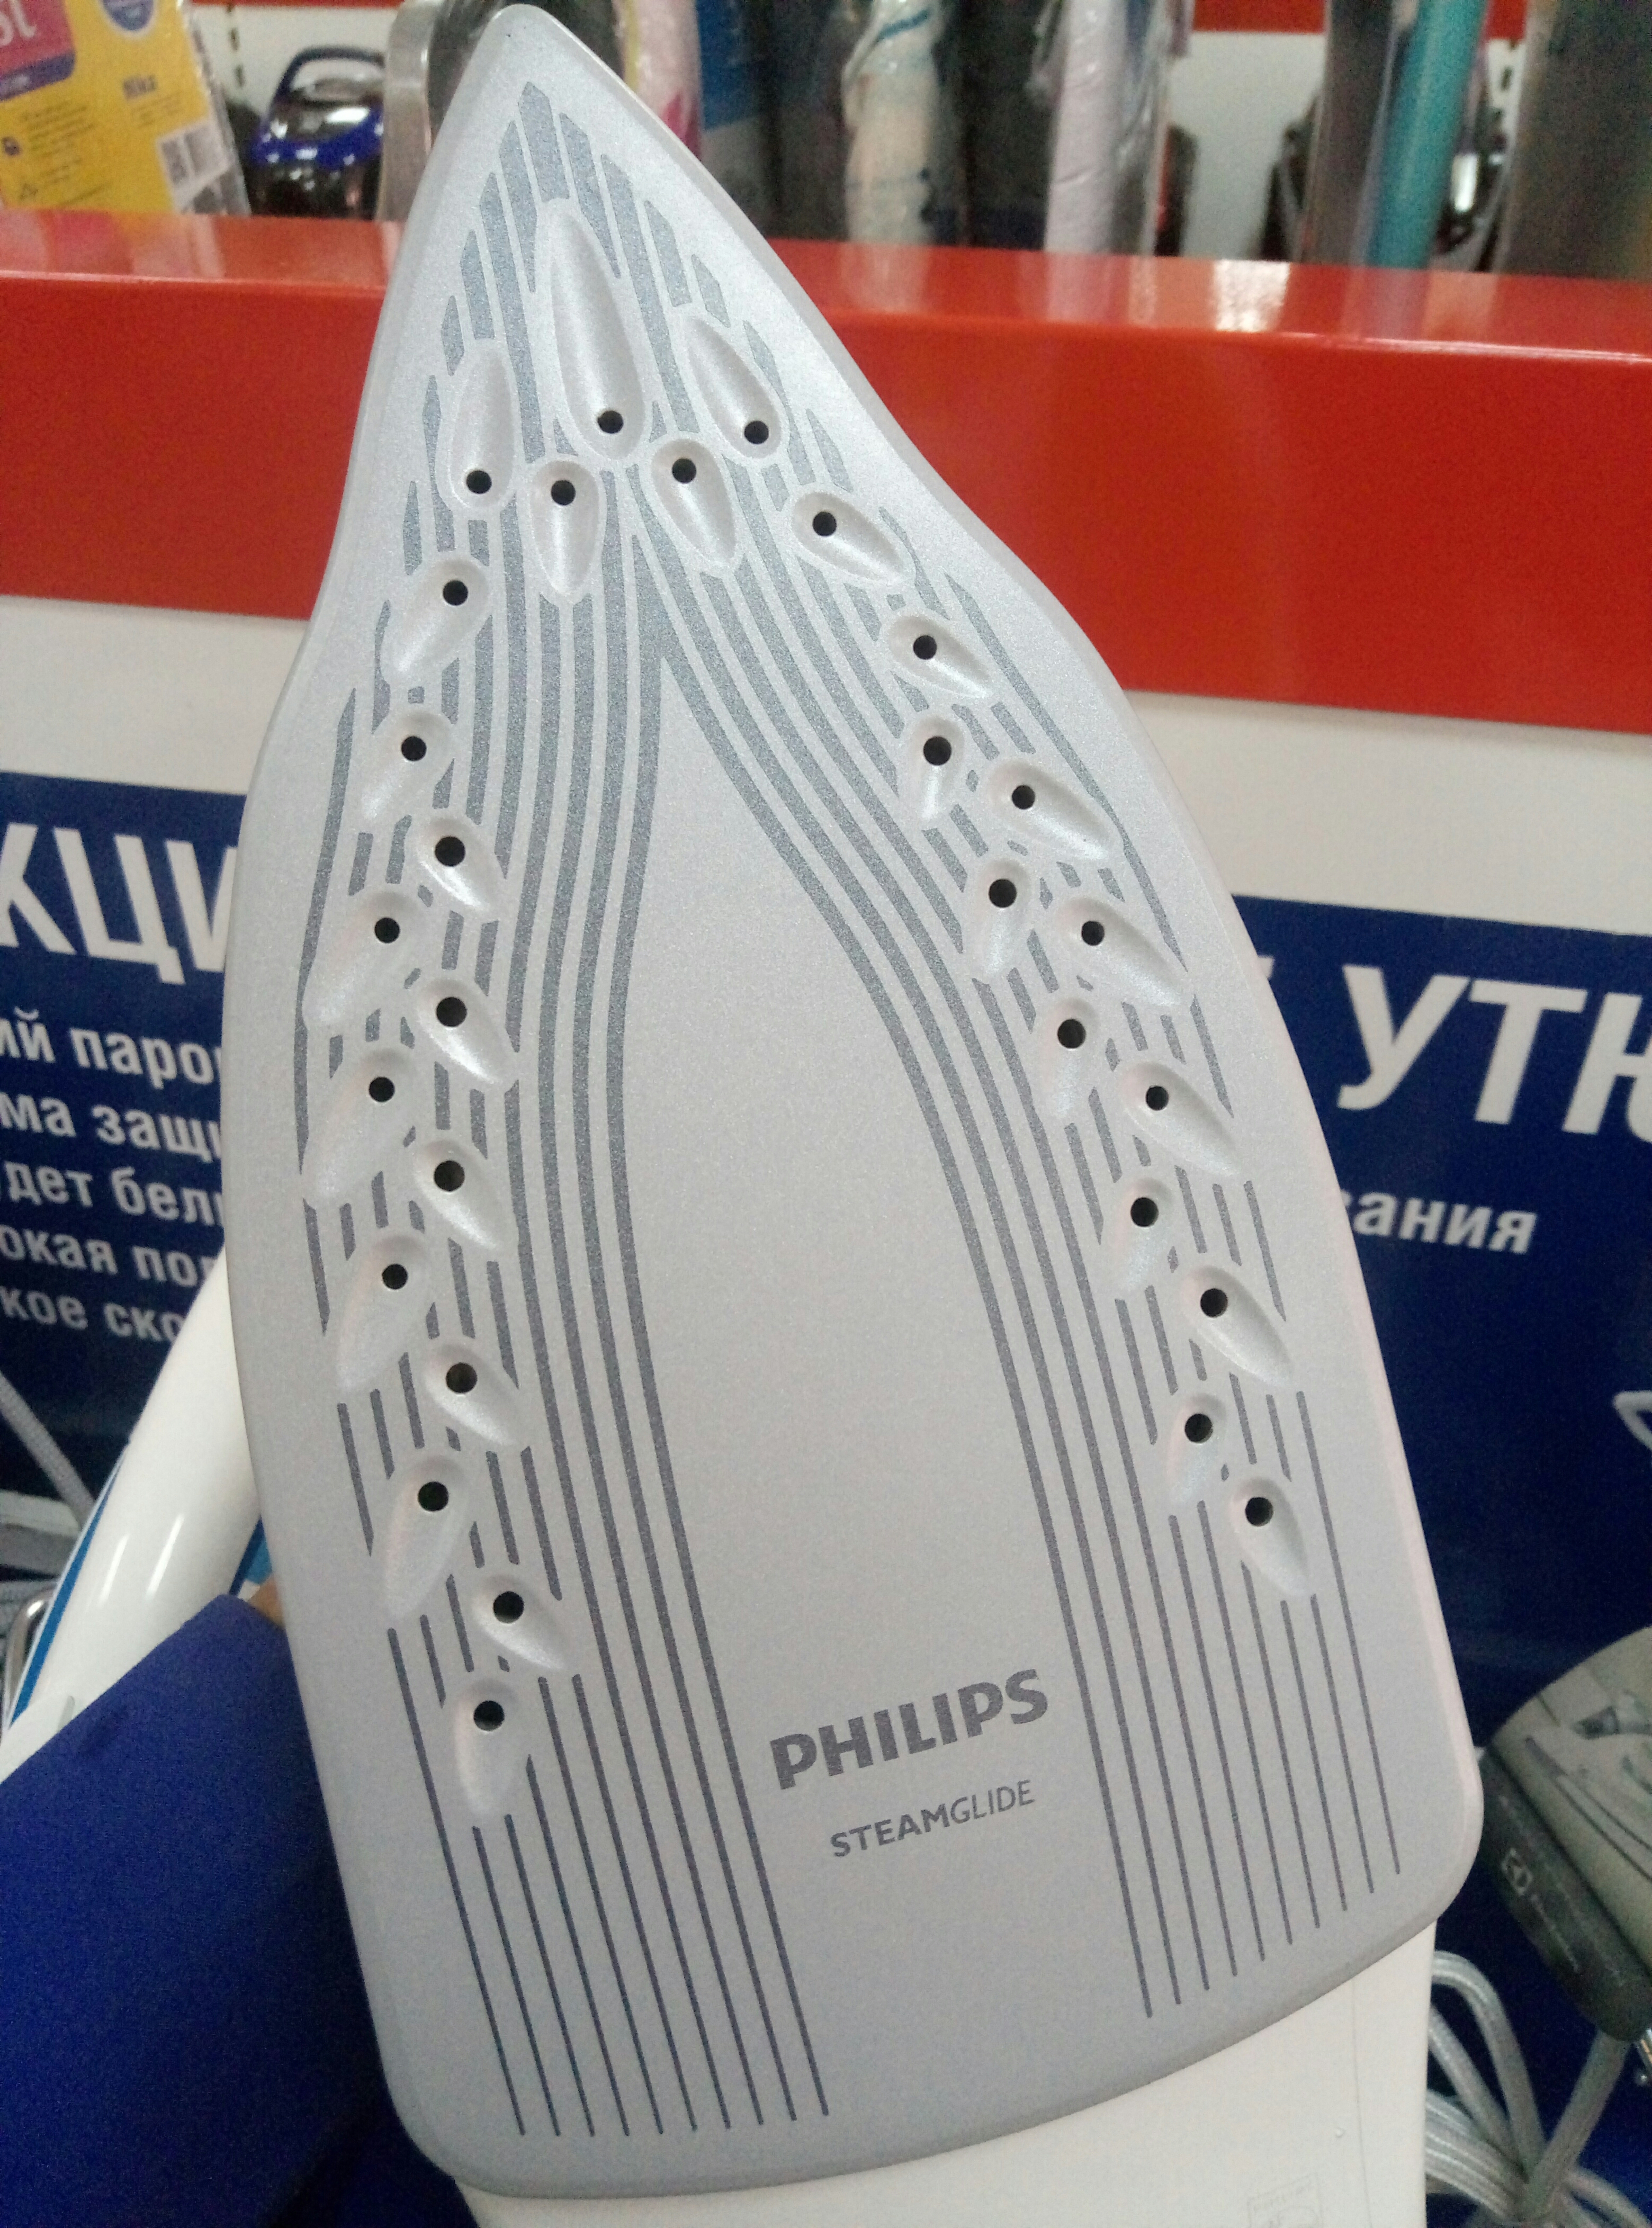 Подошва steamglide. Утюг Philips с подошвой STEAMGLIDE Plus. Утюг Philips STEAMGLIDE Ceramic. Подошва STEAMGLIDE Plus. STEAMGLIDE Plus подошва утюга.